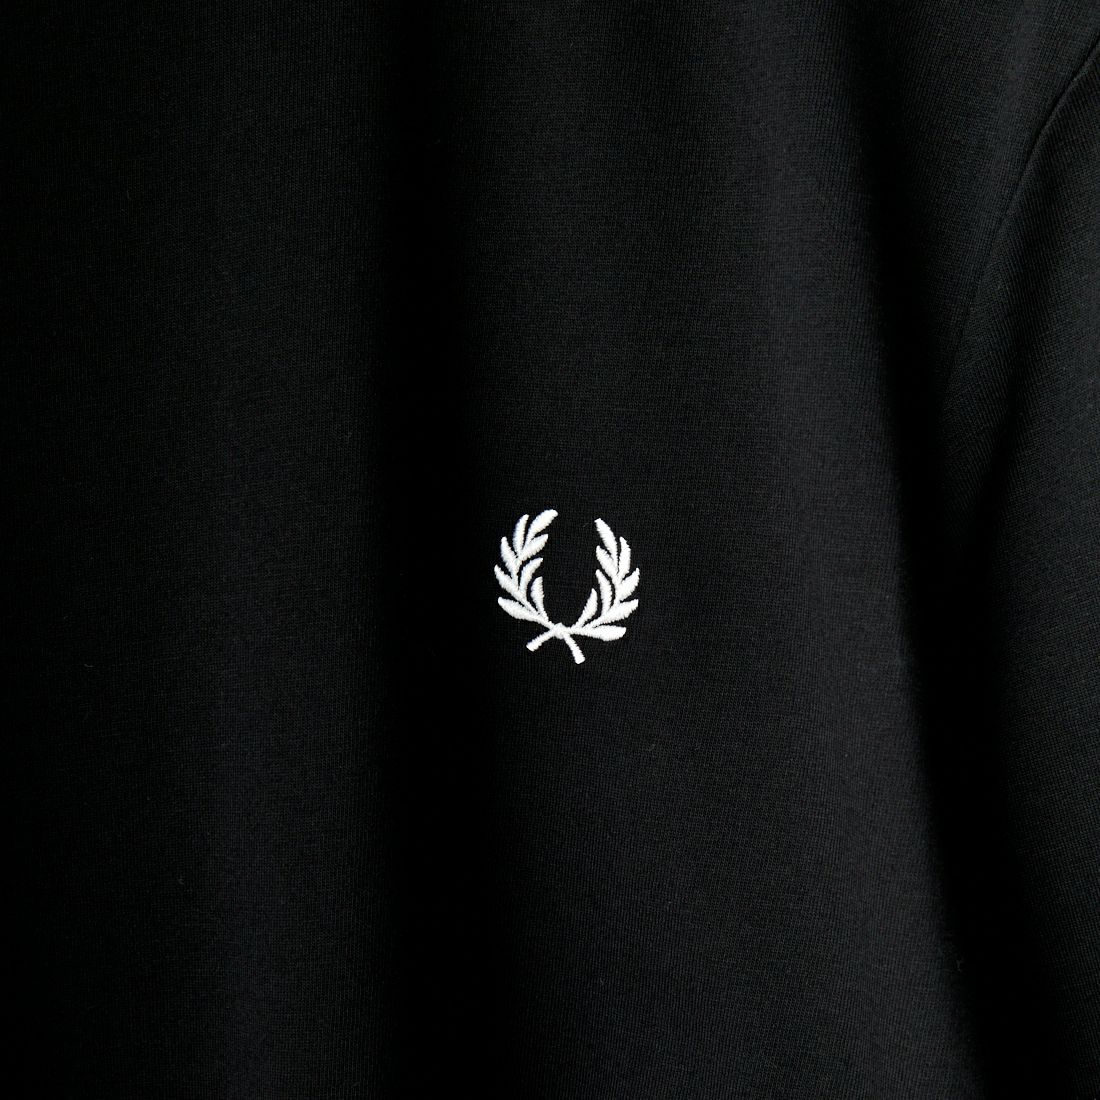 FRED PERRY [フレッドペリー] のビックローレルリースロゴ バックプリントTシャツ [M7784-JF] 102 BLACK